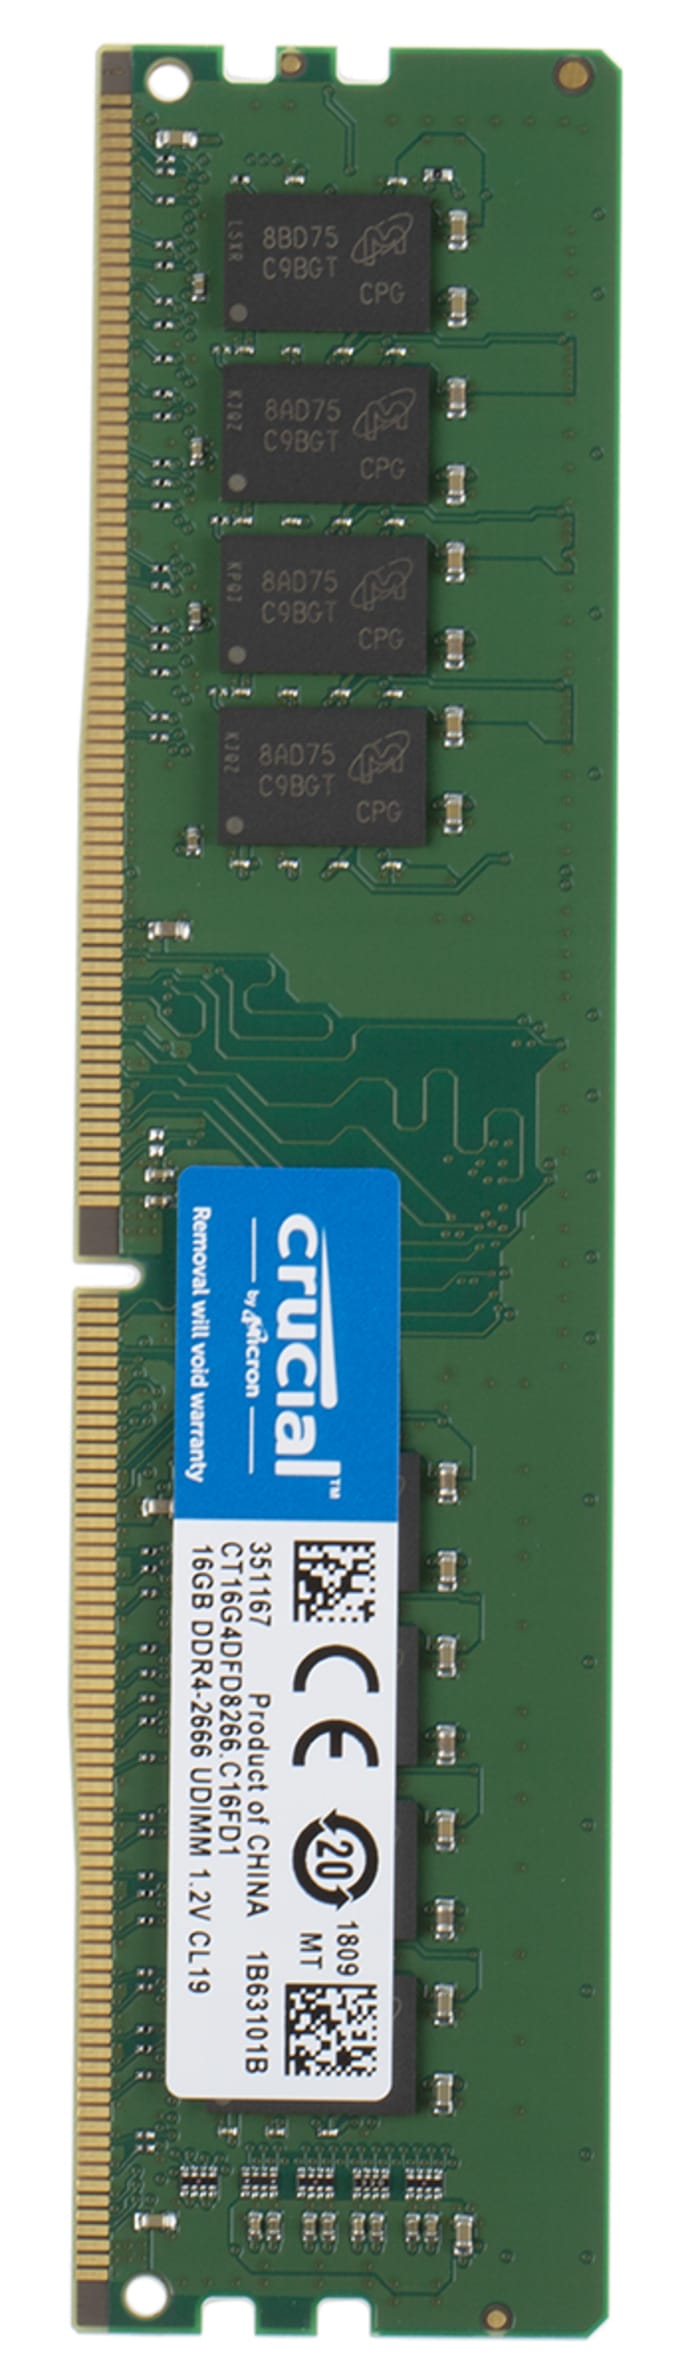 Crucial Basics 16GB DDR4 1.2V 2666Mhz CL19 UDIMM 288-pin RAM Memory Module  for Desktop, Green